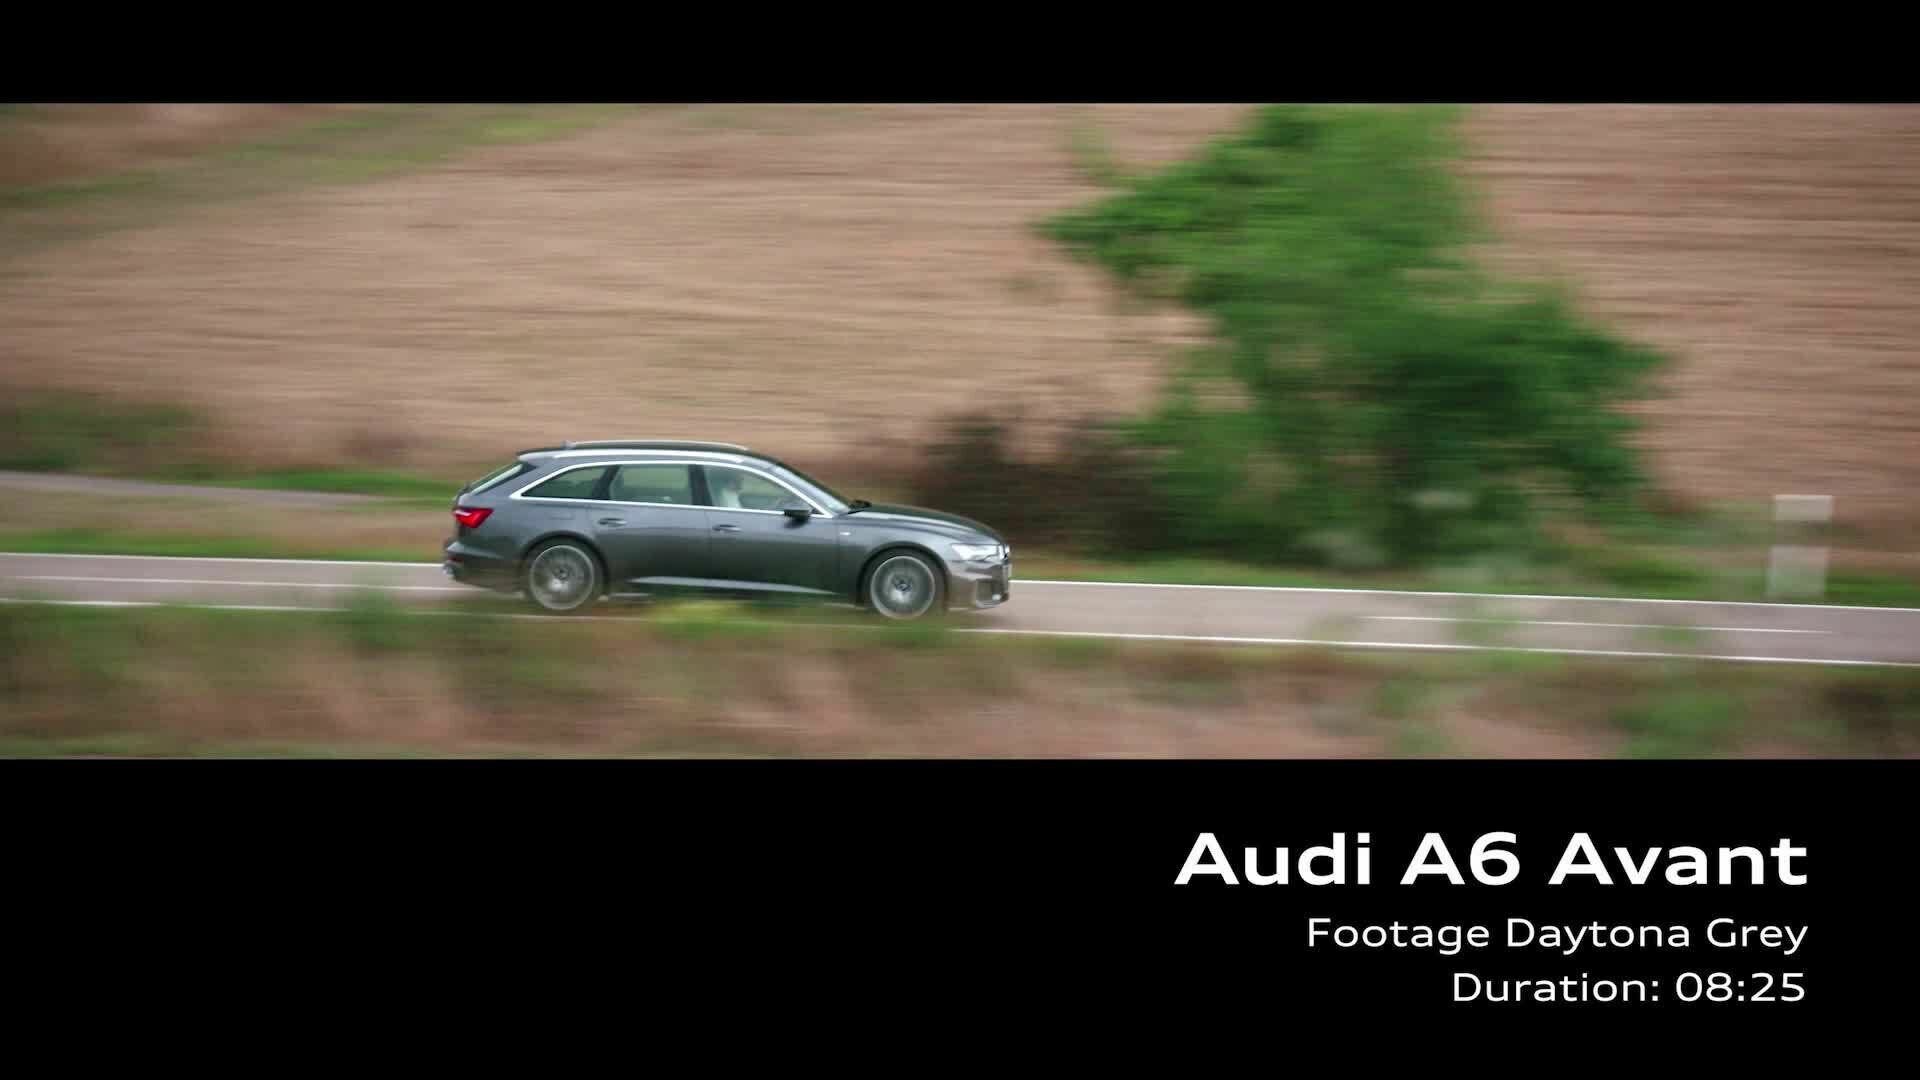 Audi A6 Avant – on Location Footage Daytona Grey